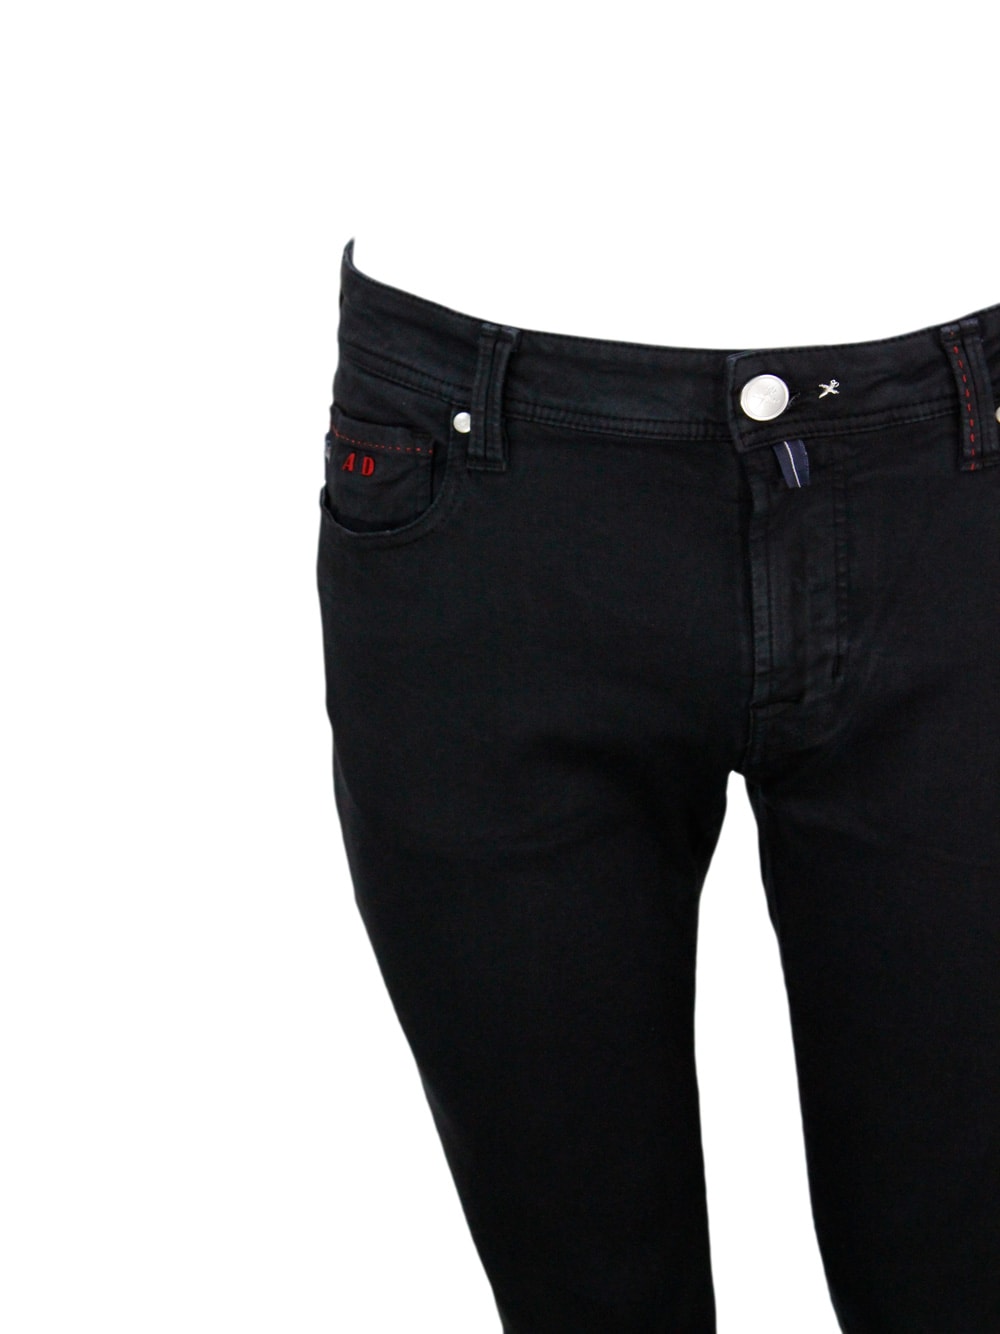 Shop Sartoria Tramarossa Leonardo Zip Trousers In Super Stretch Cotton With 5 Pockets With Tone-on-tone Tailored Stitching An In Dark Blu